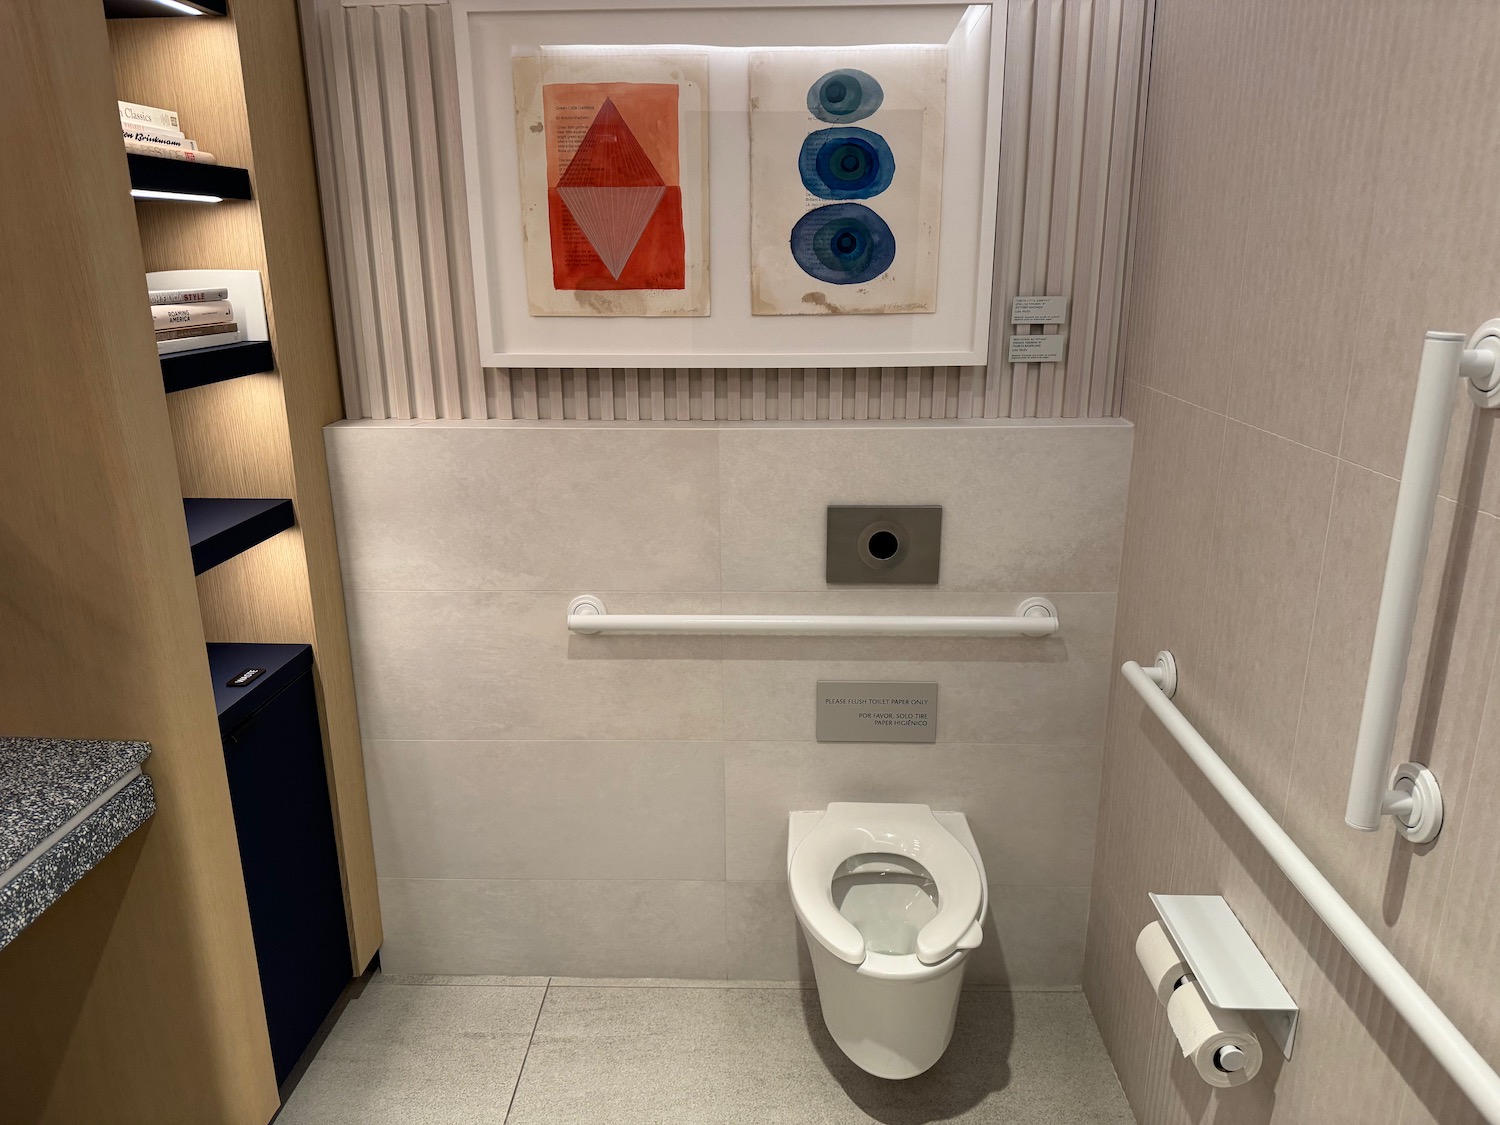 a bathroom with a toilet and a bar